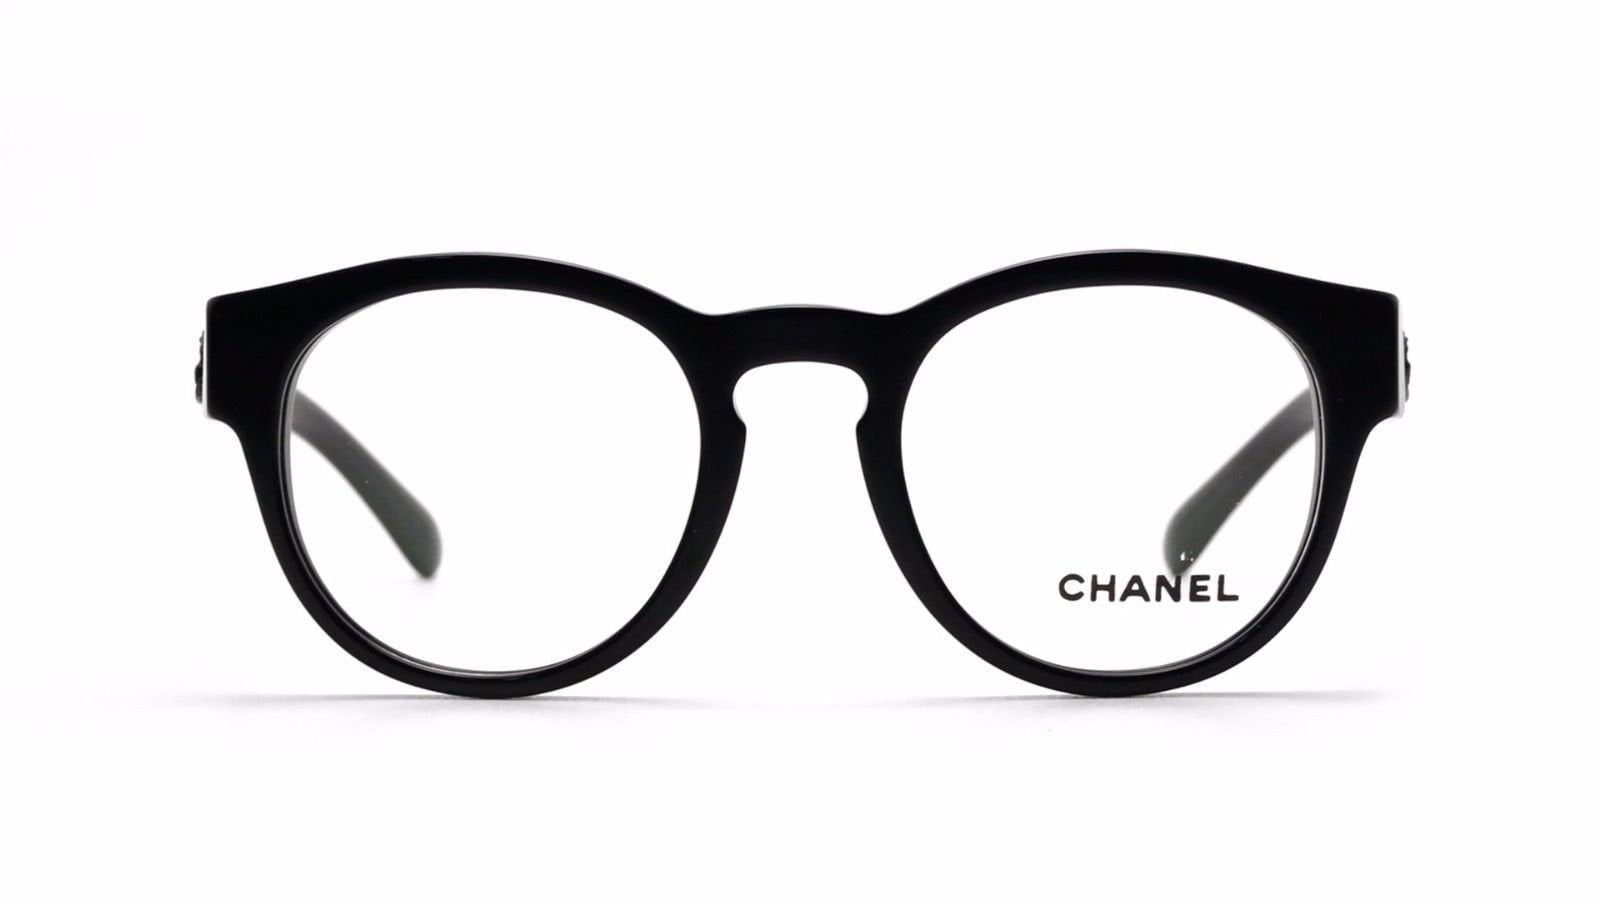 Chanel Glasses 3213 c714 Brown Tortoise Frames Eyeglasses Rx Italy 5416  140  eBay